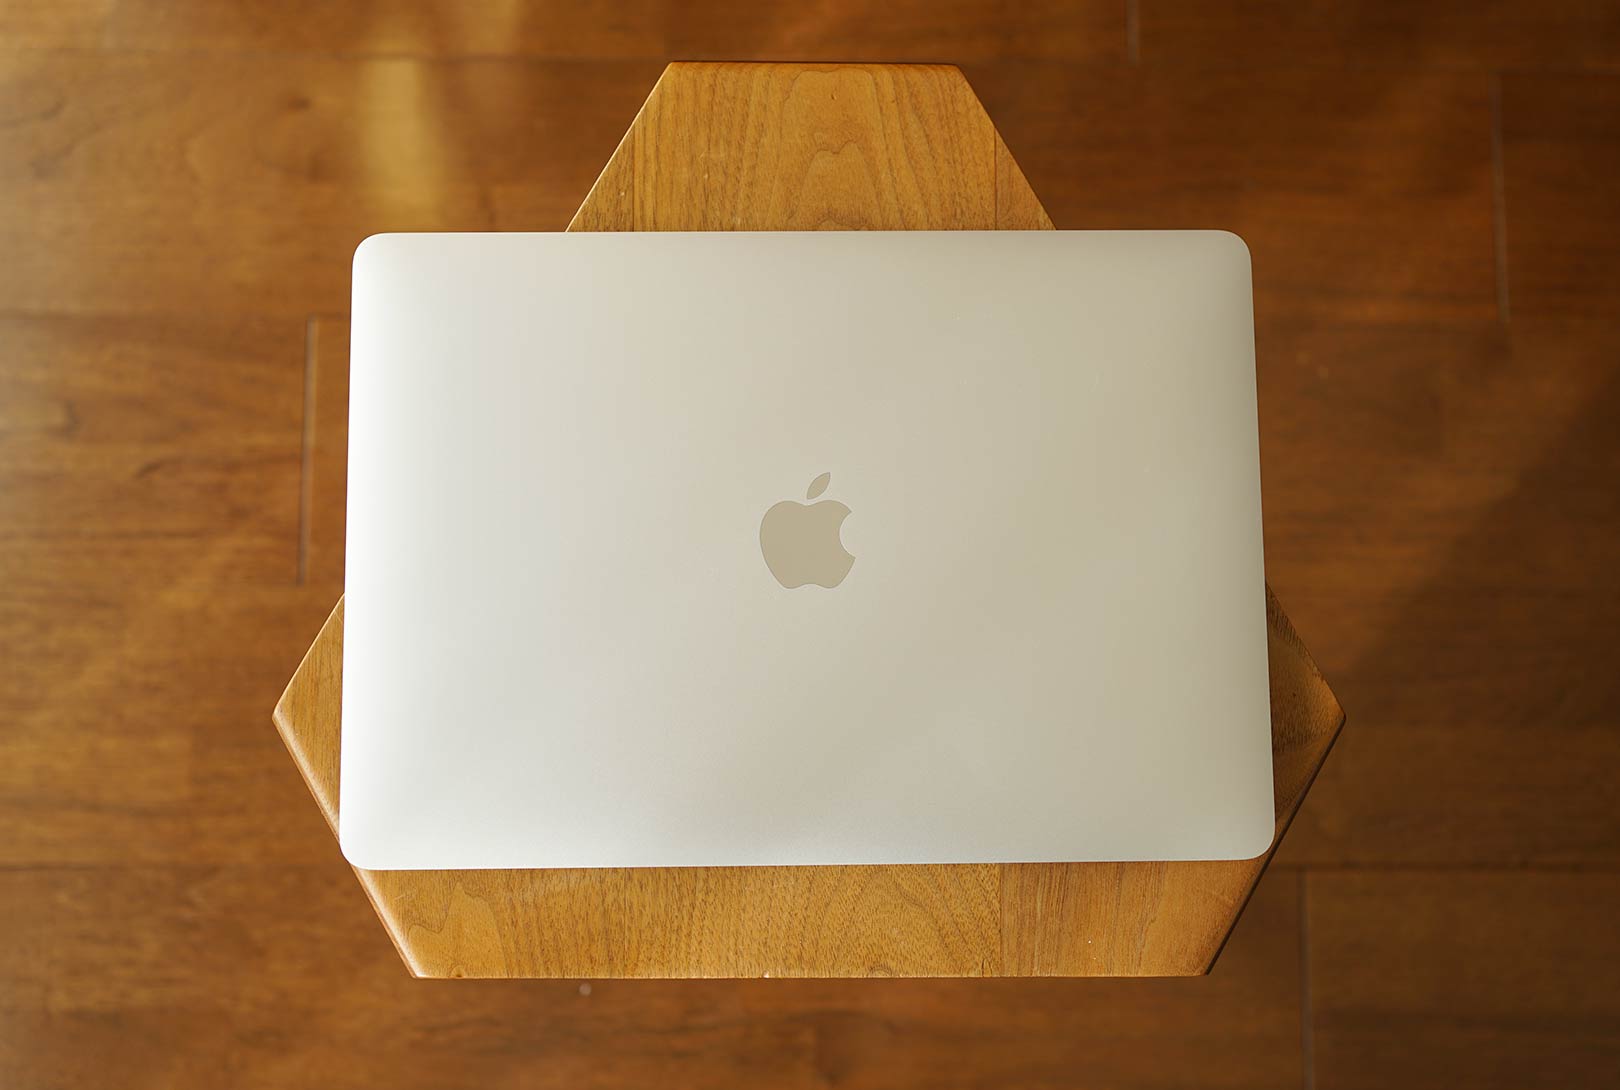 MacBook Air,m1,筐体,軽い